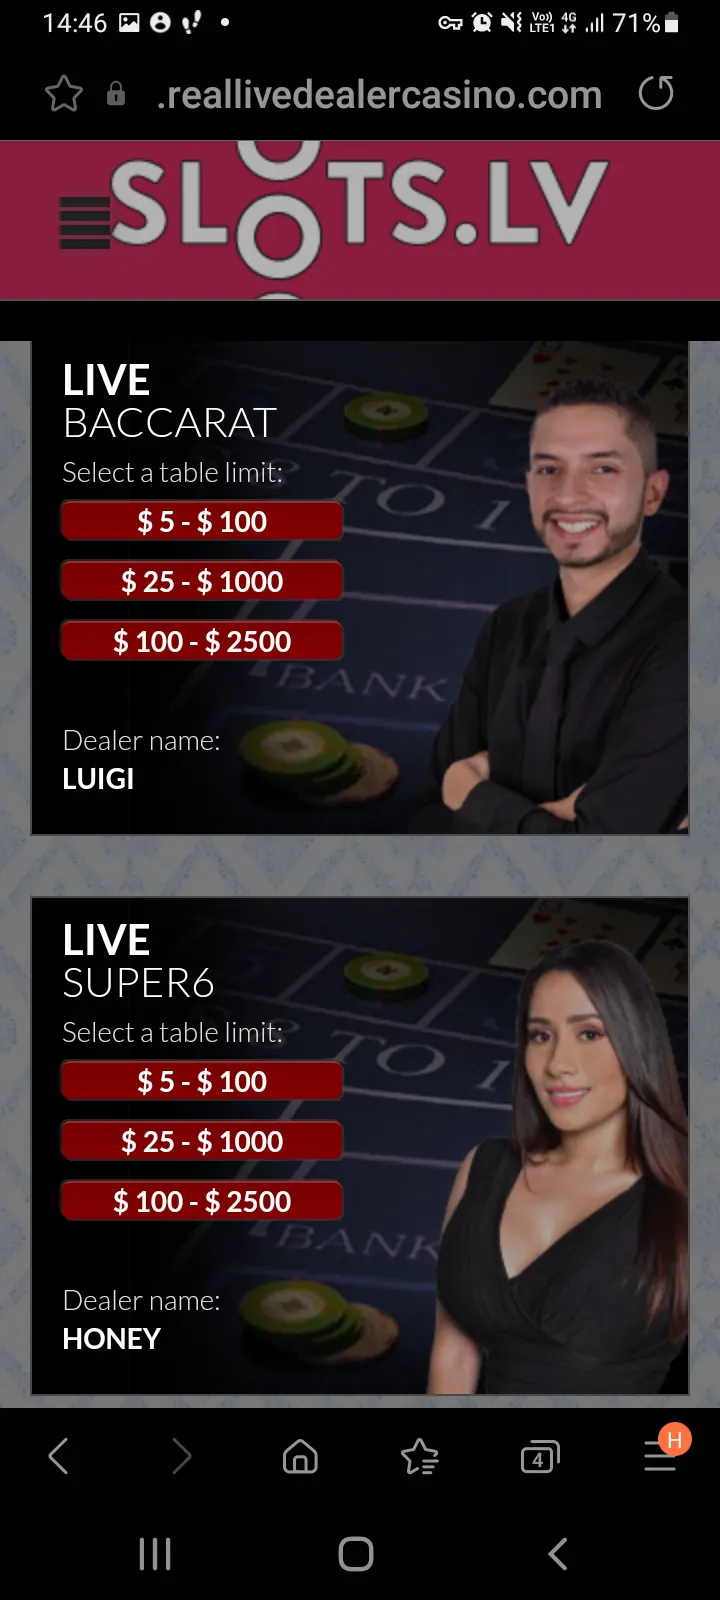 Slots.lv casino app screenshot 8